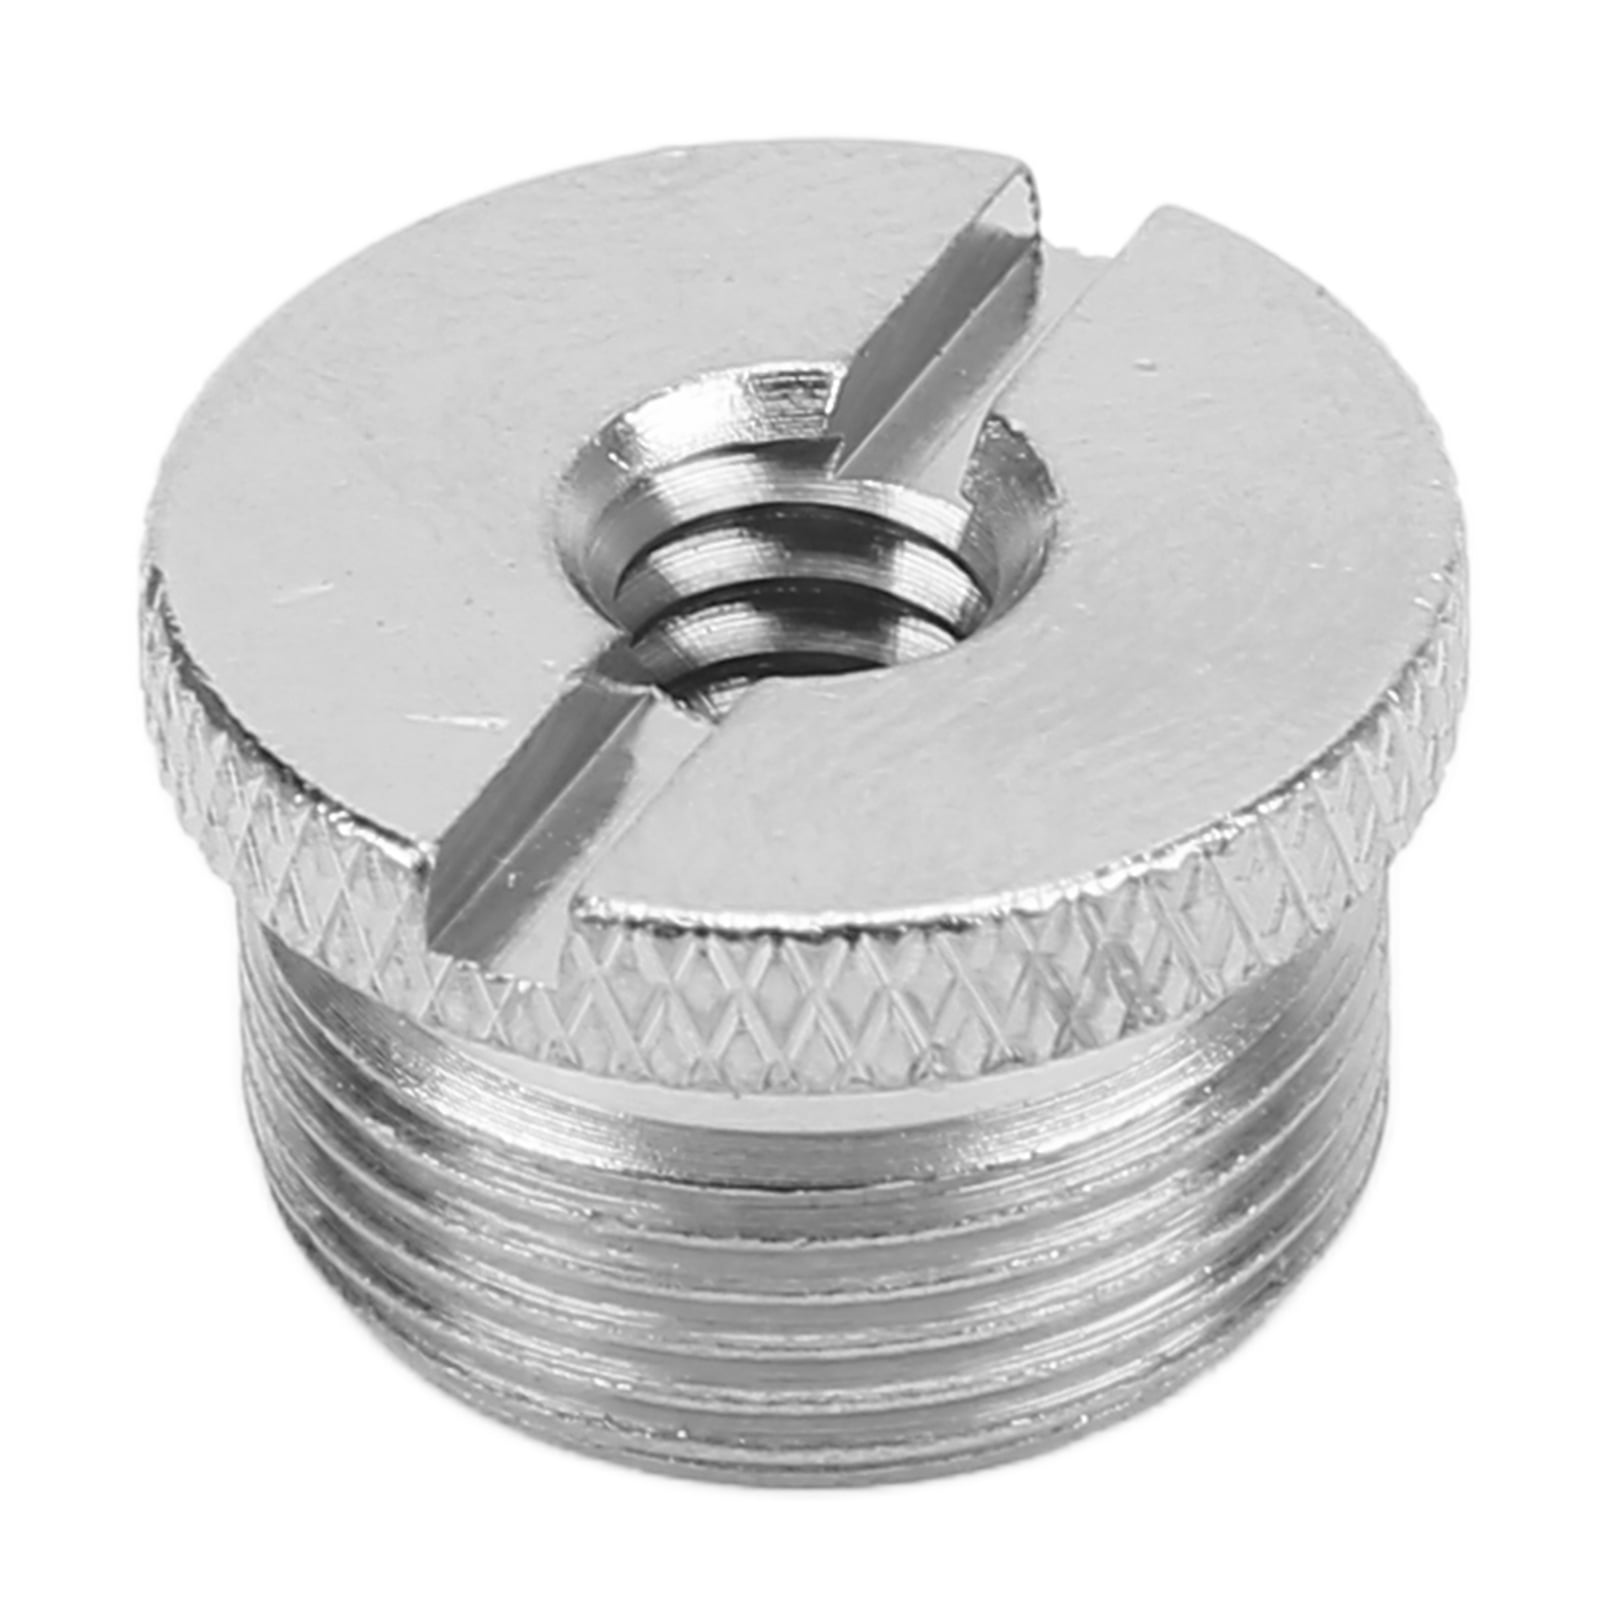 mic-screw-adapter-service-life-mic-thread-adapter-clear-thread-convertible-screw-hole-uniform